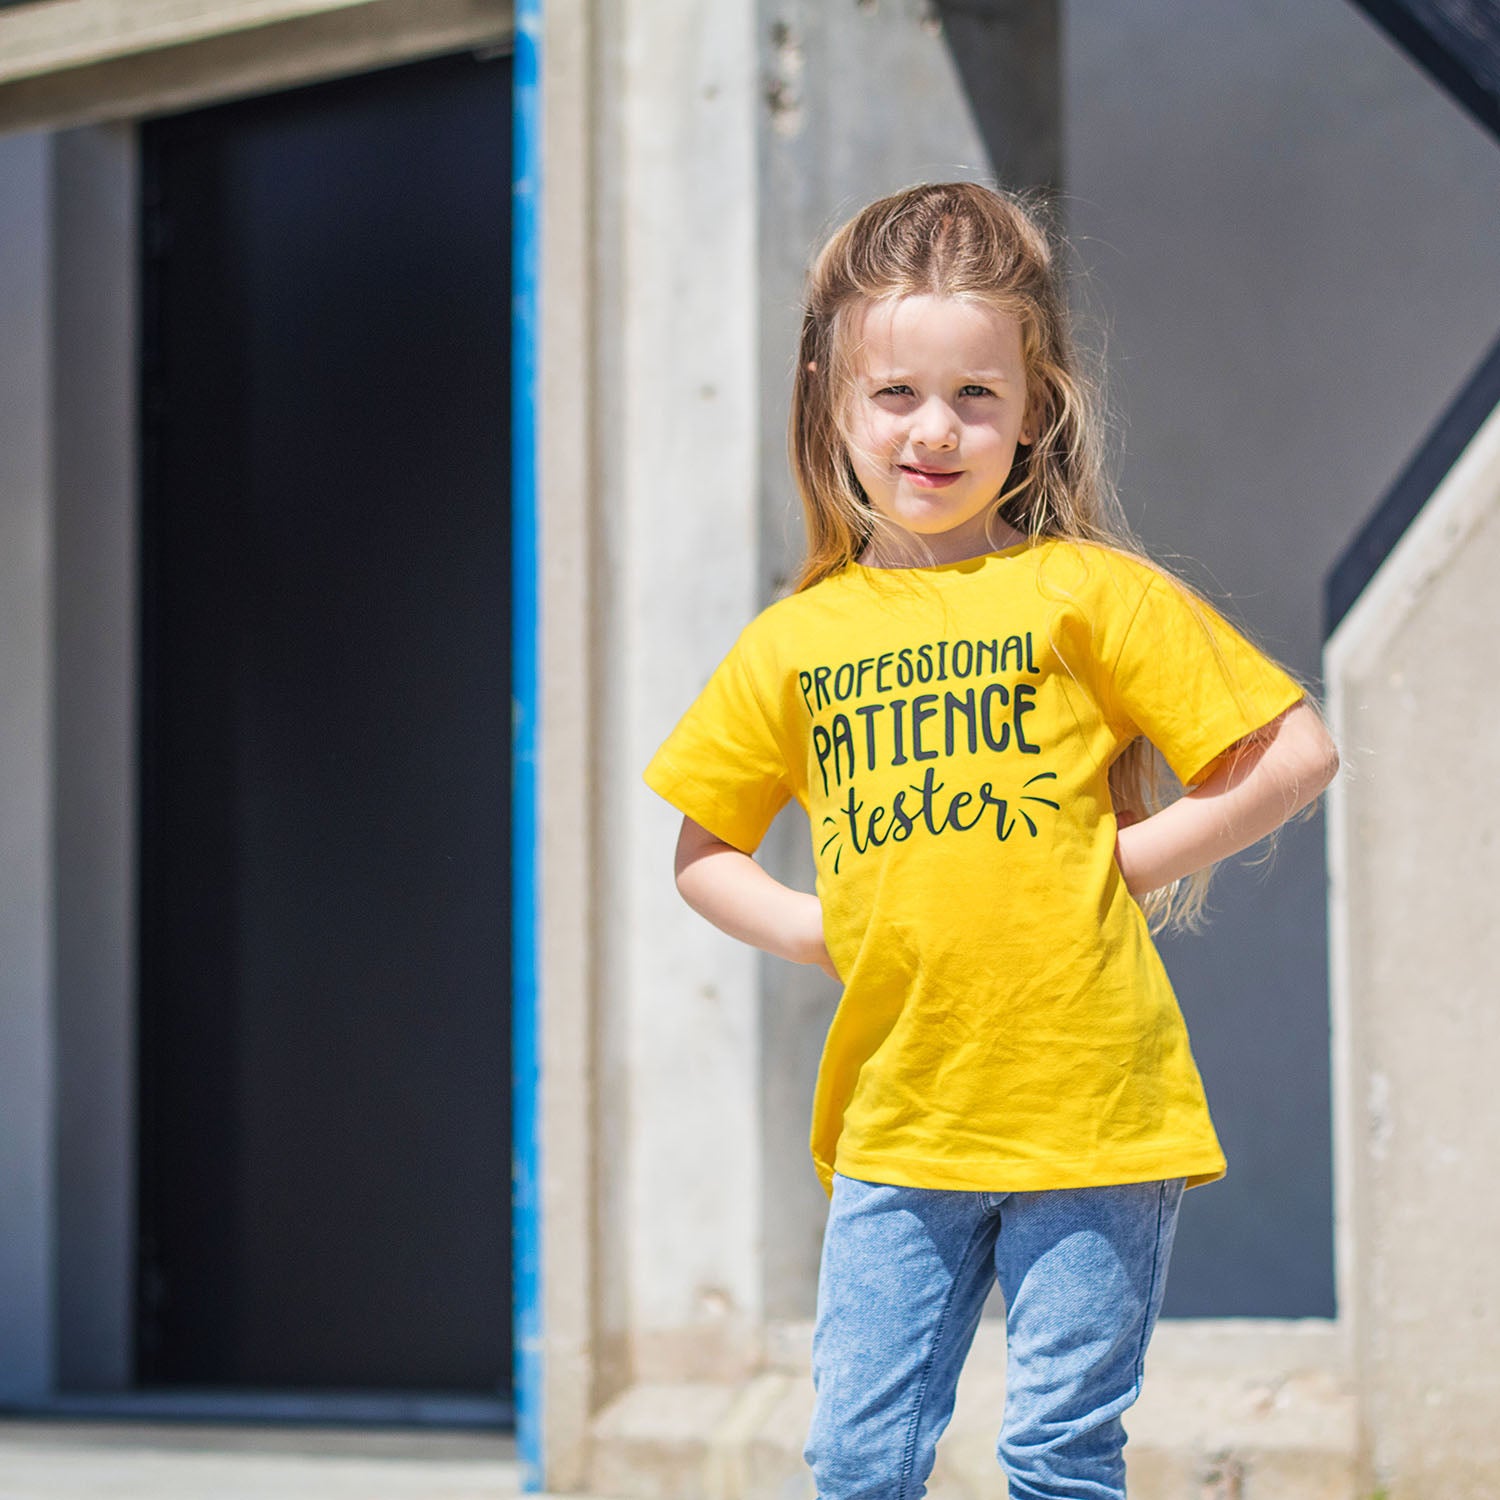 'Professional patience tester' kids shortsleeve shirt